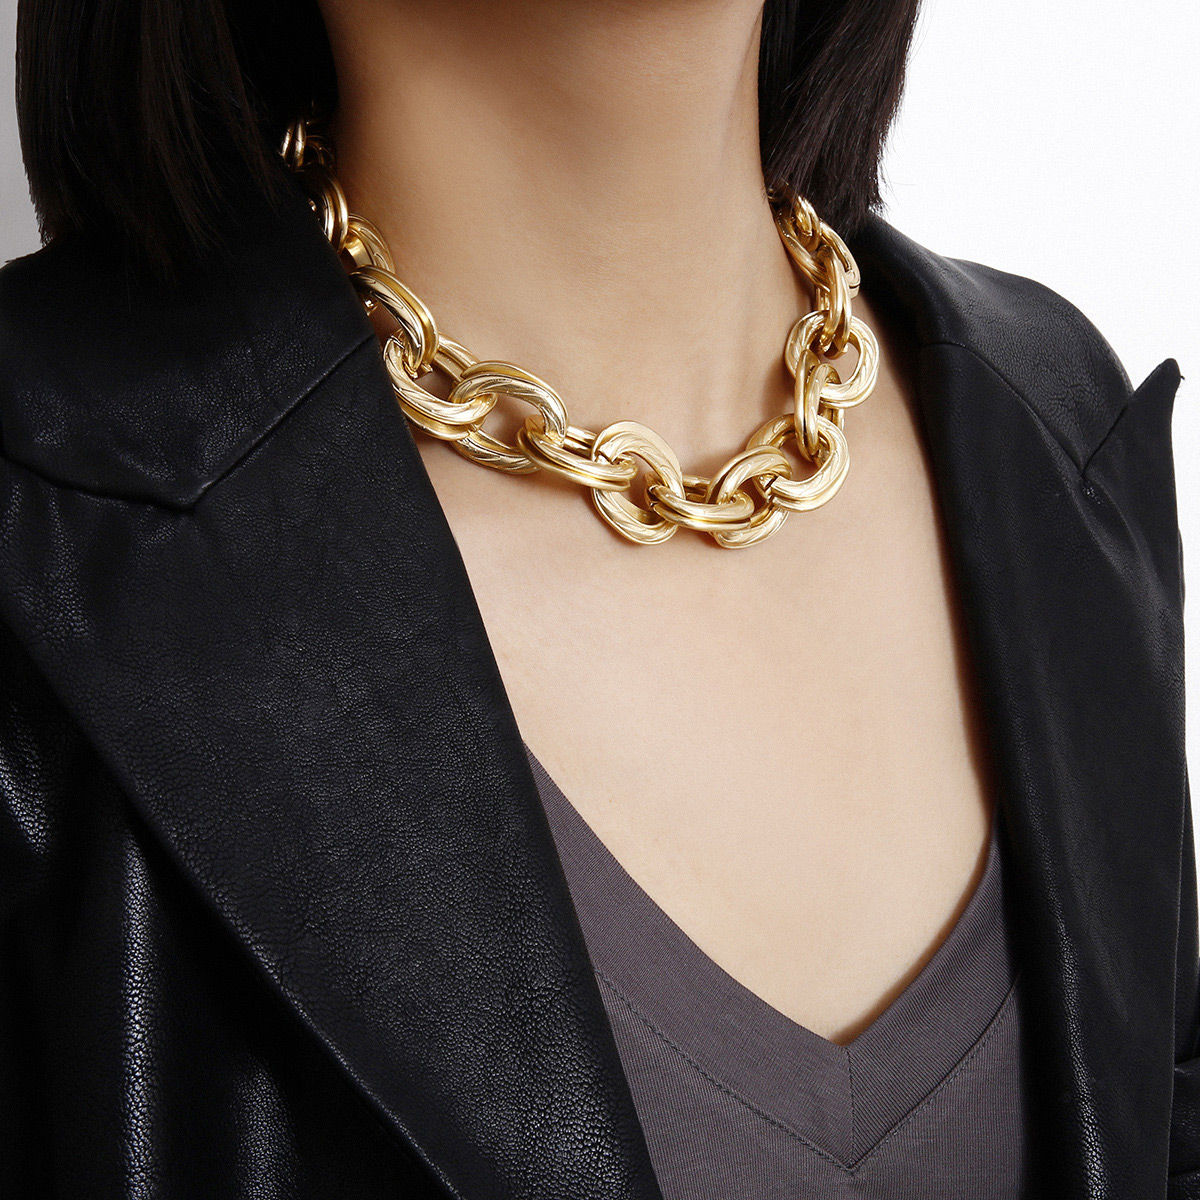 Buy Black And Gold Chunky Statement Necklace Set Online. – Odette